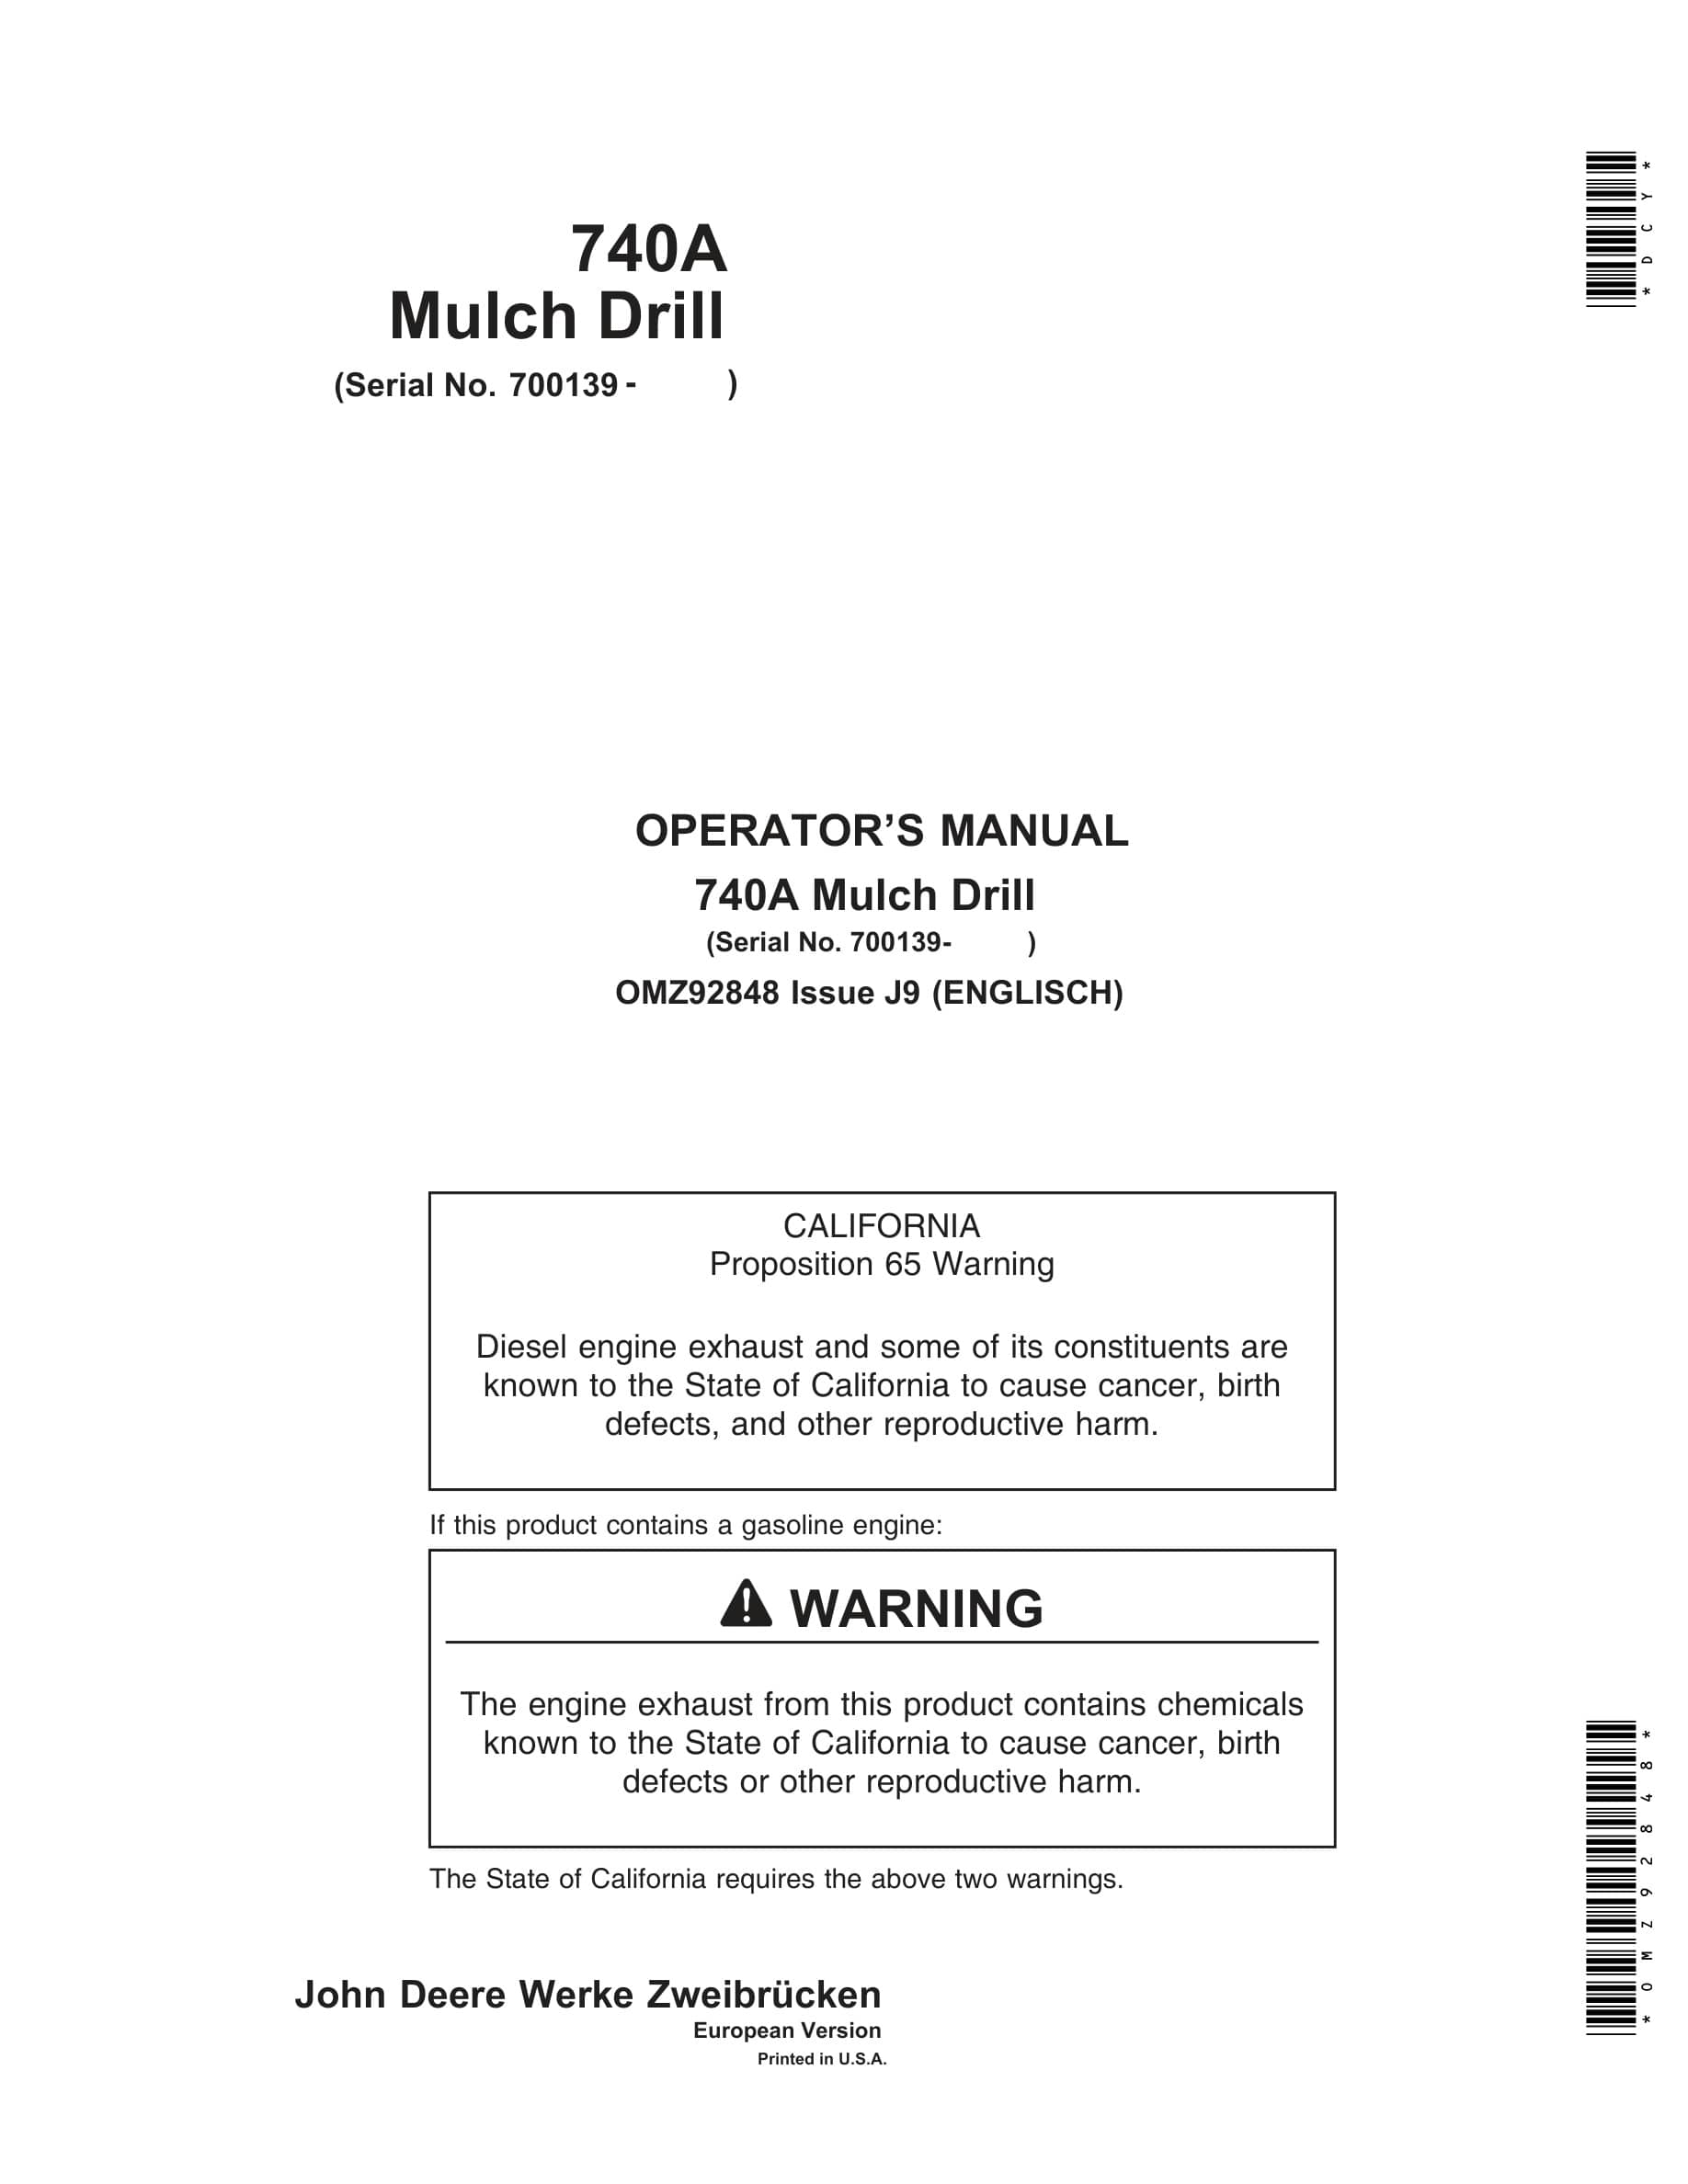 John Deere 740A Mulch Drill Operator Manual OMZ92848-1